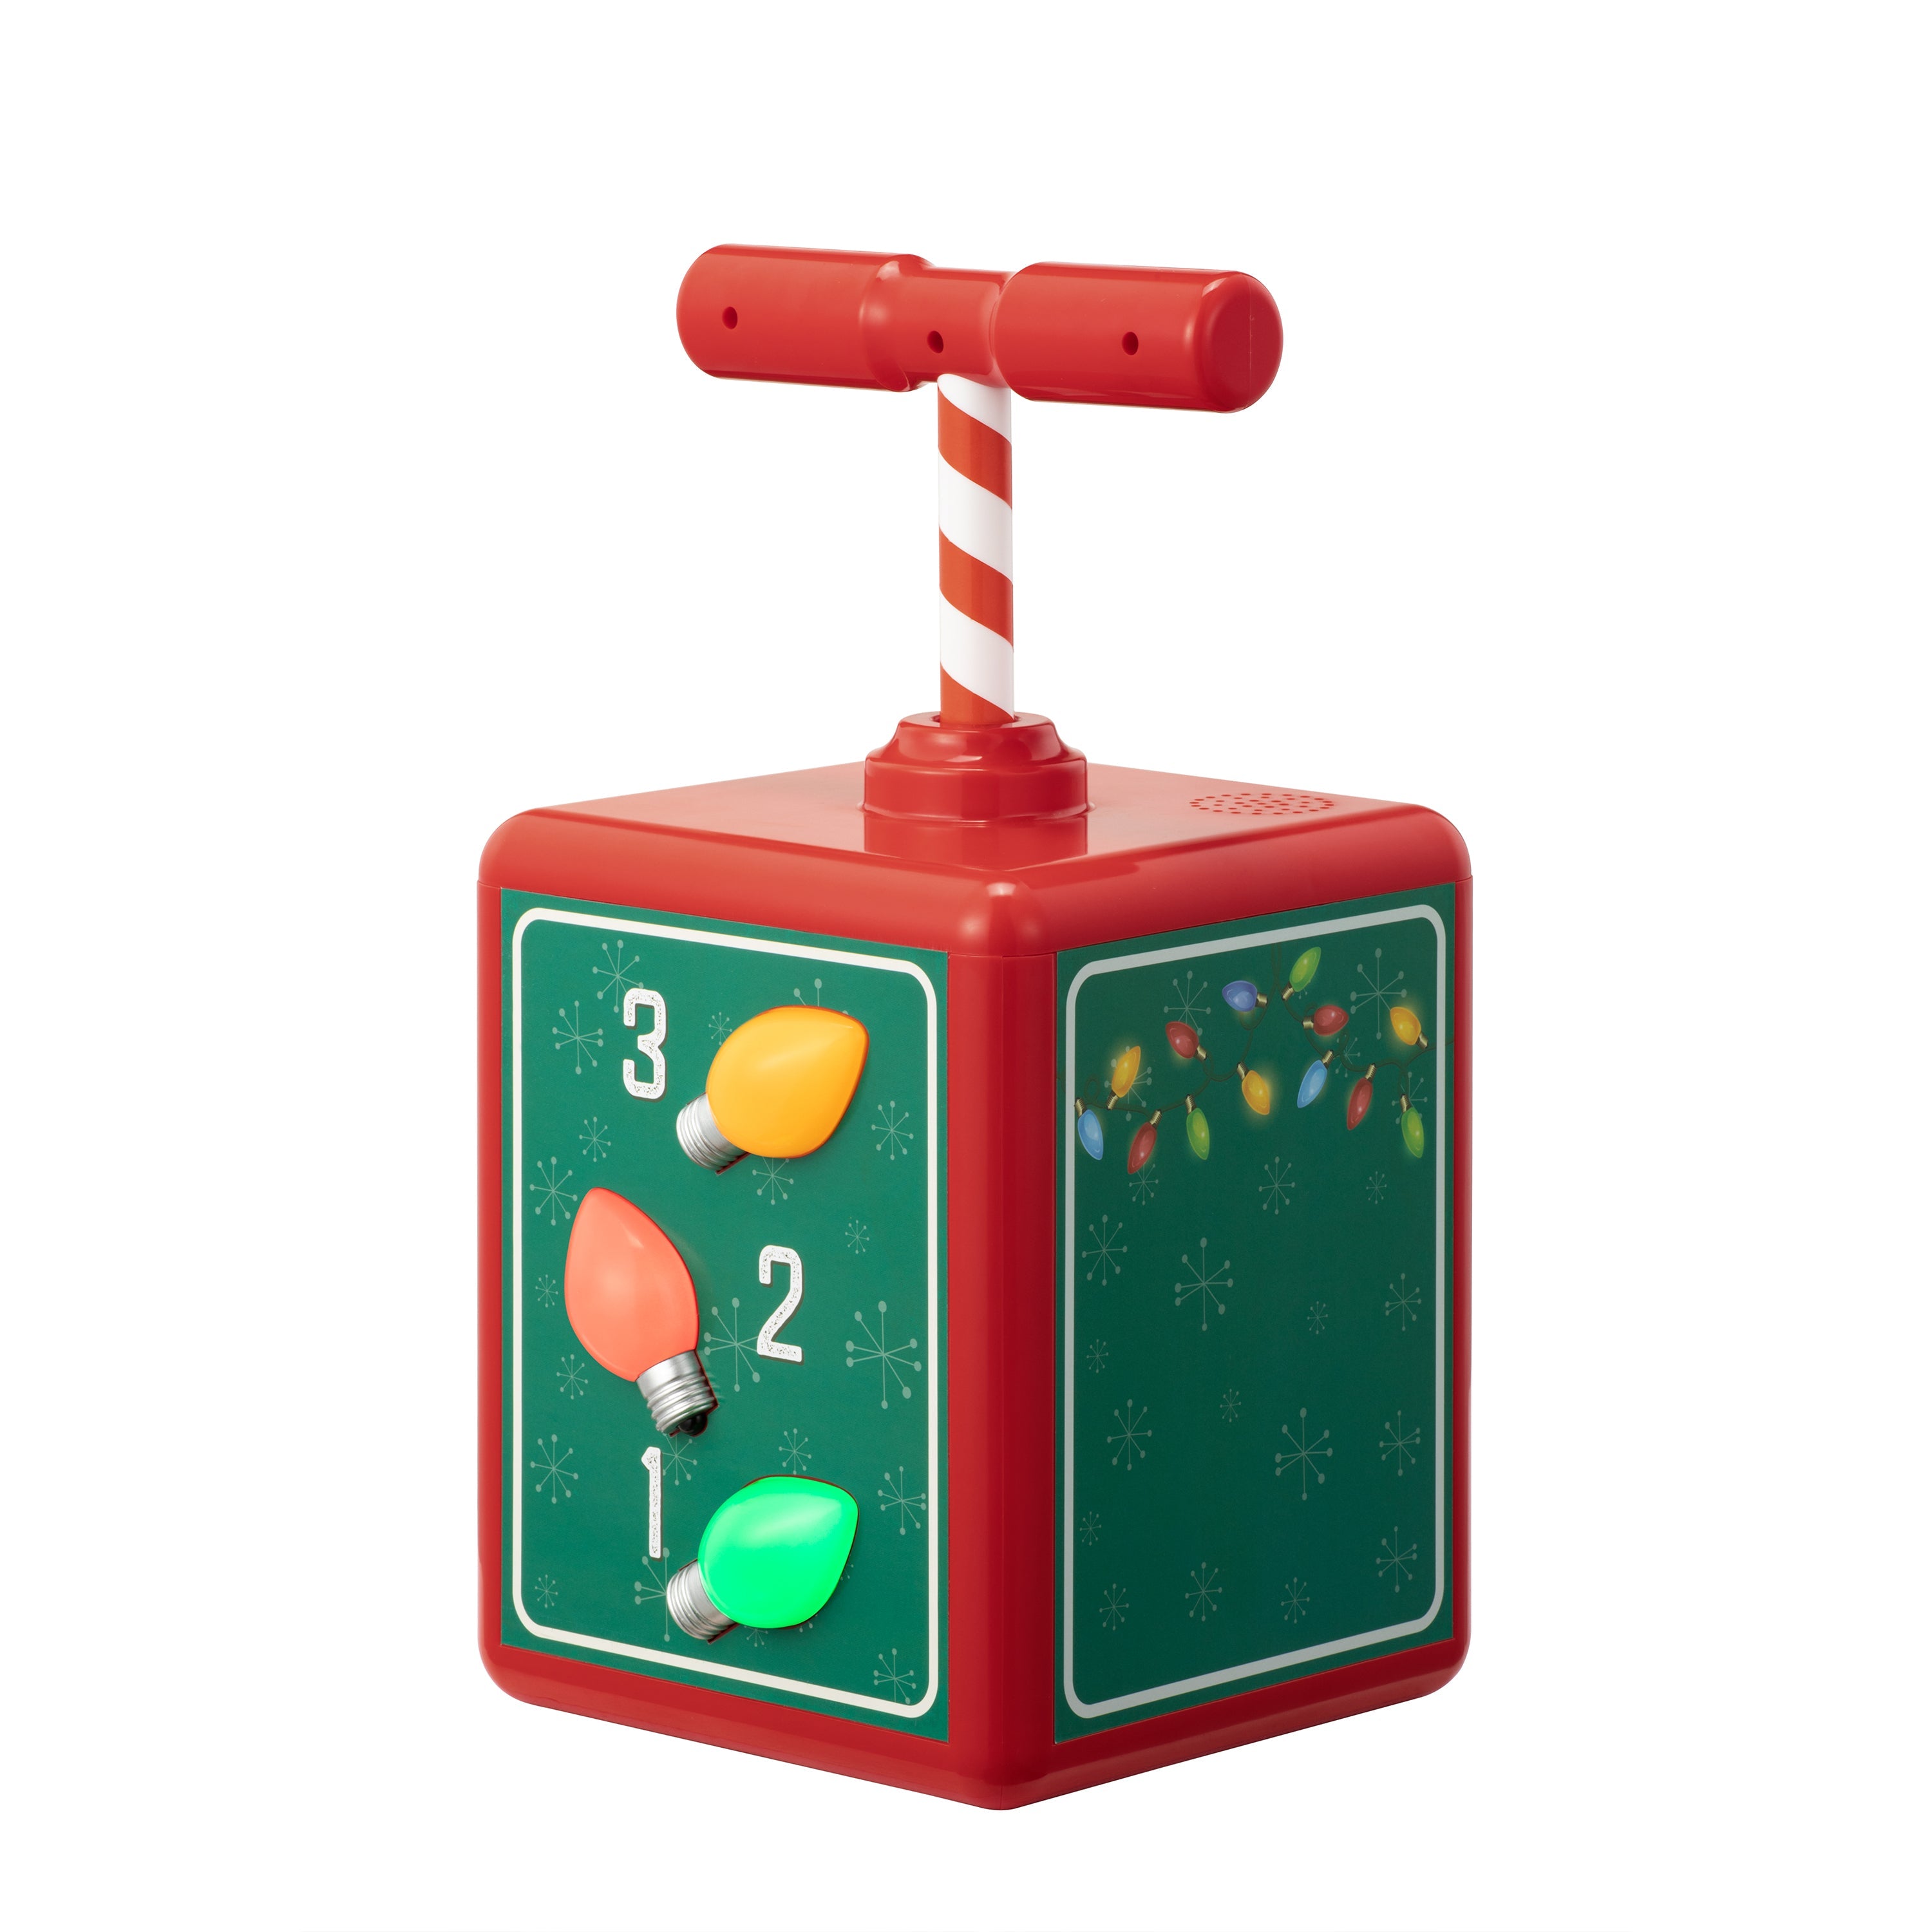 Wireless Christmas Tree Light Controller - Wondershop 1 ct